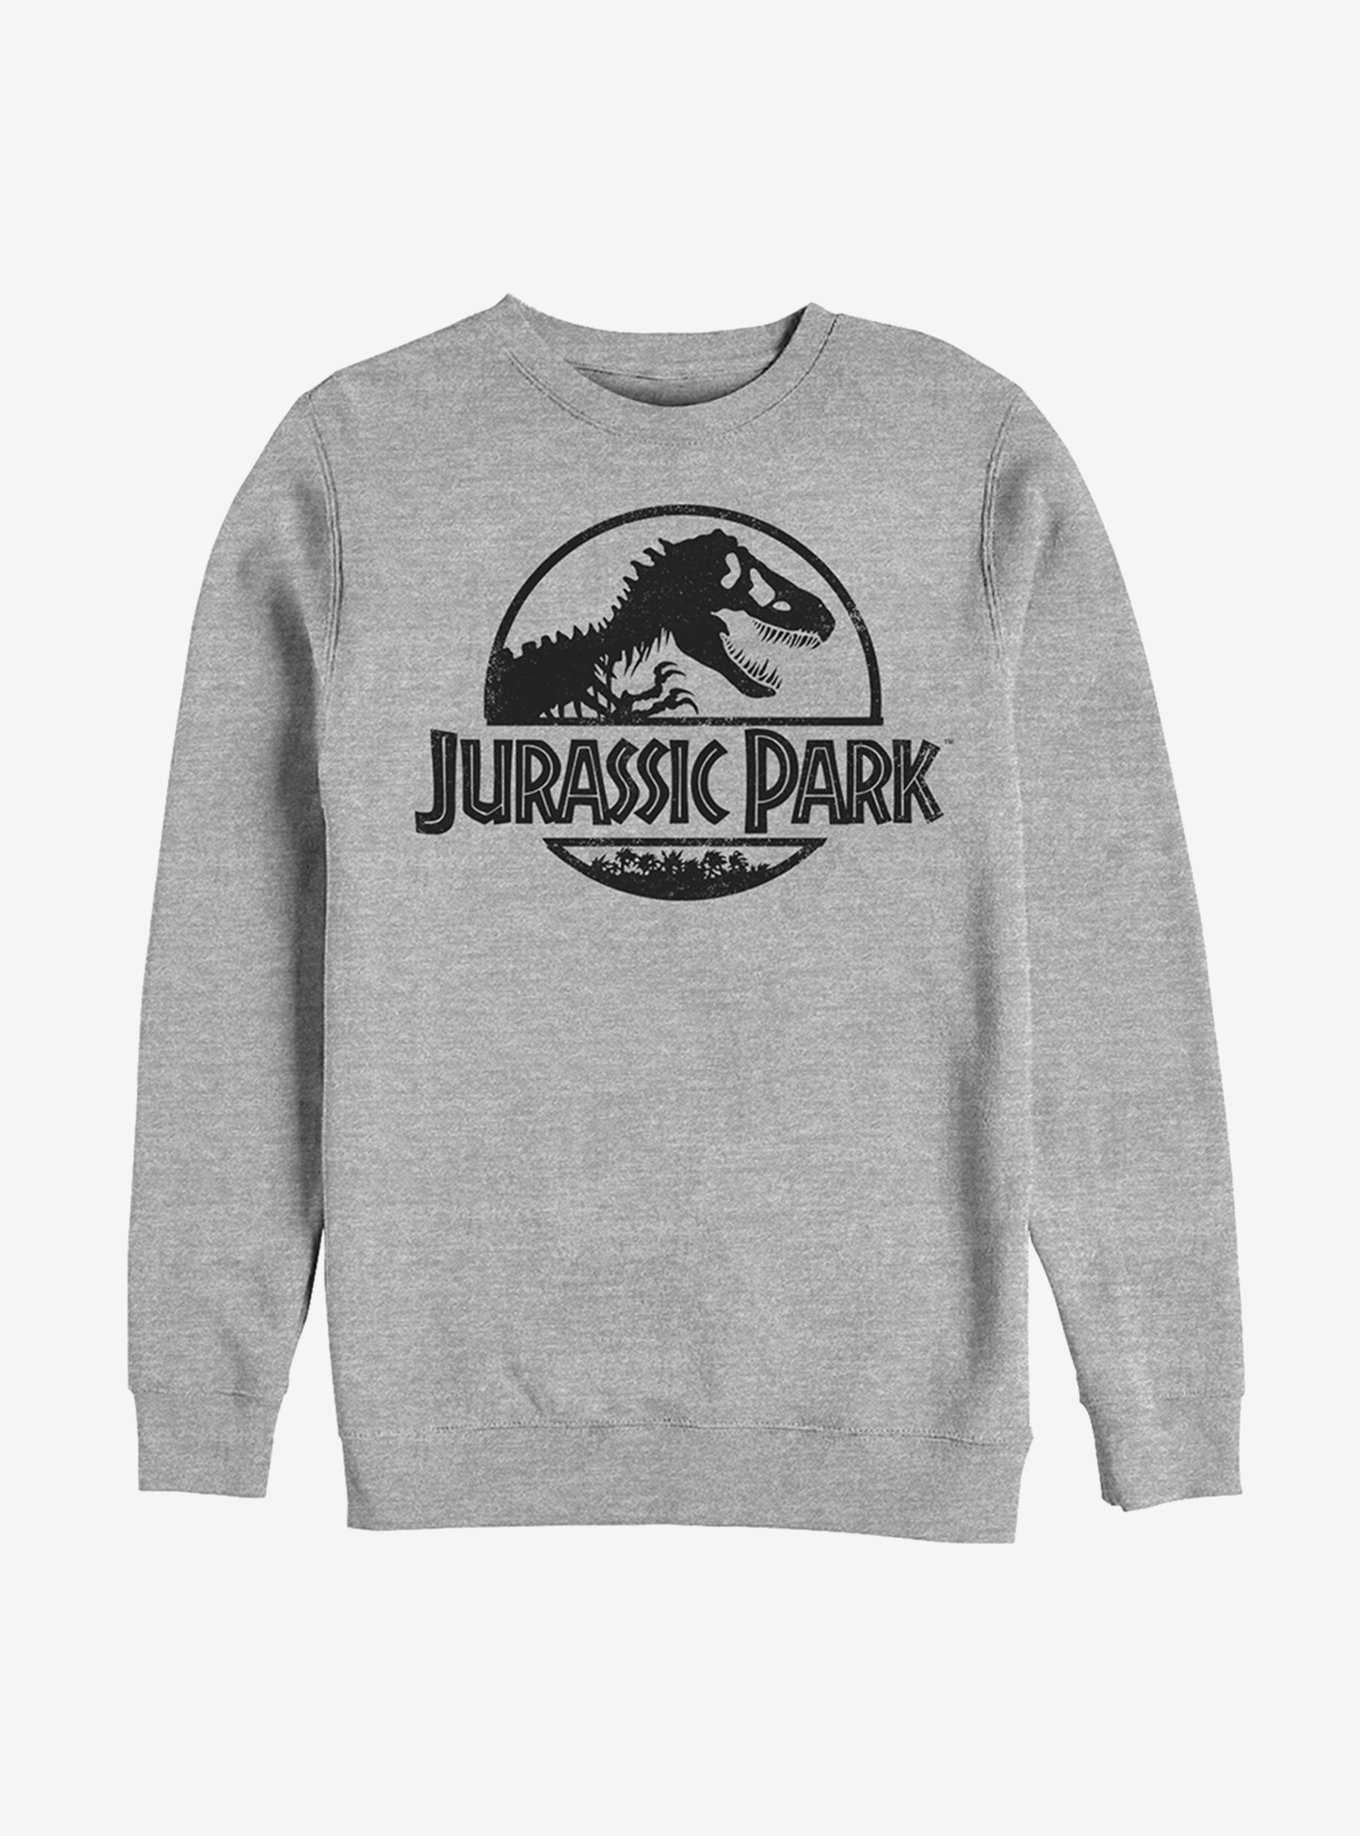 Jurassic Park compra Merch ahora